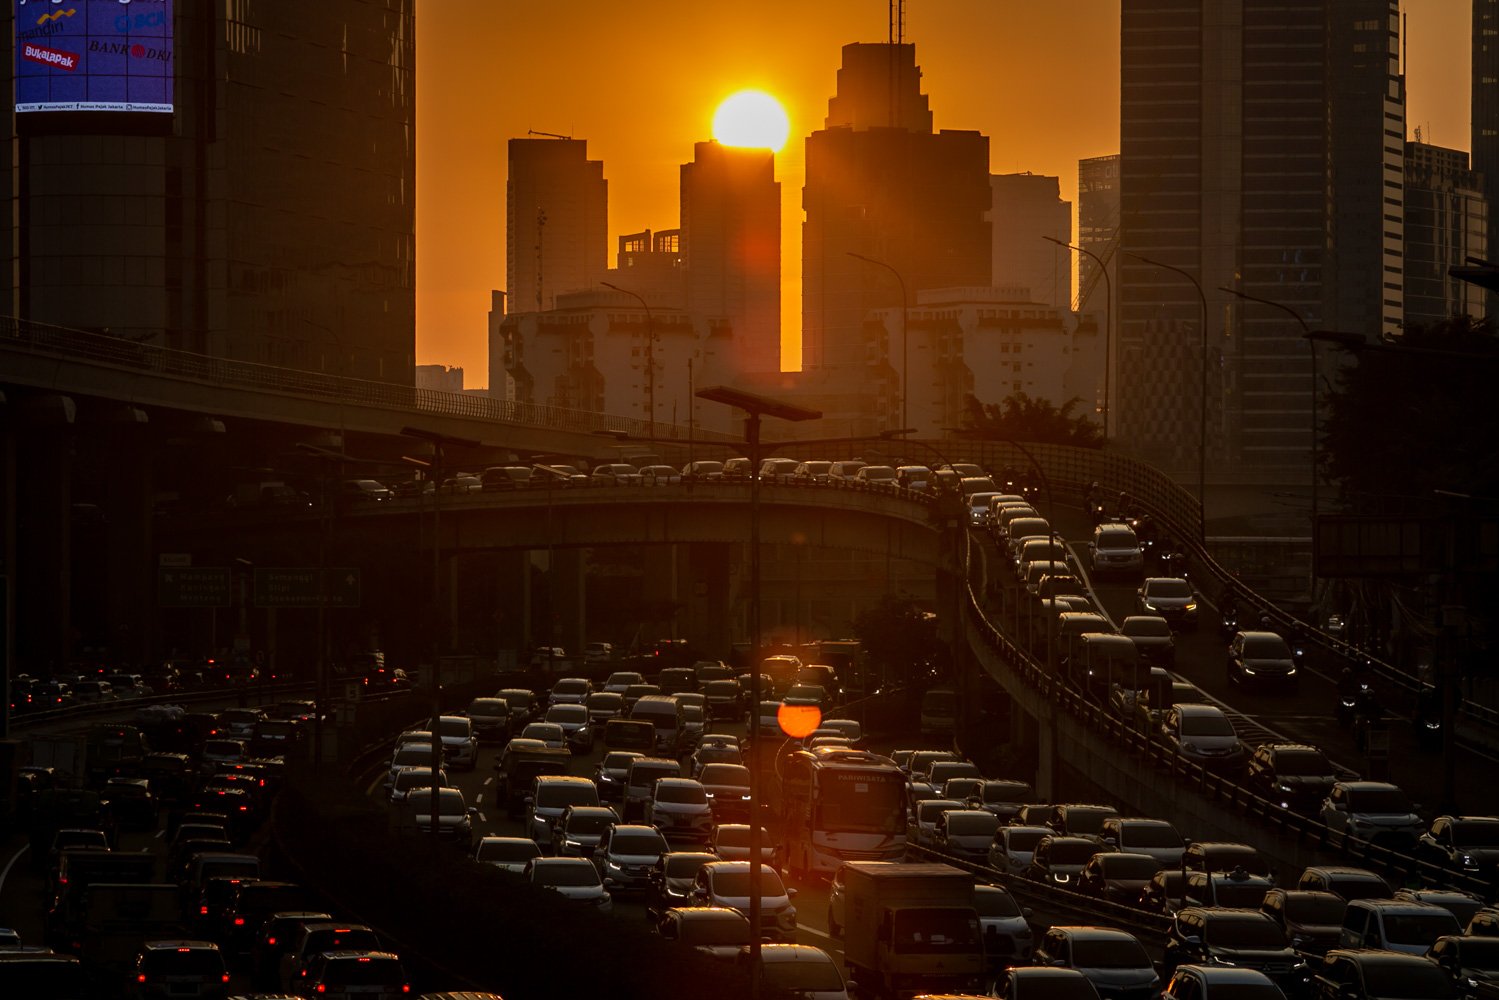 Kendaraan memadati Jalan Gatot Subroto, Jakarta, Jumat (9/6). Menurut data Badan Pusat Statistik pada 2021, terdapat 16,5 juta sepeda motor yang menjadi andalan mobilitas warga Jakarta karena dinilai praktis dan cepat. Tercatat juga ada 4,1 juta mobil penumpang, 785.000 truk, serta 342.000 bus di Ibu Kota.